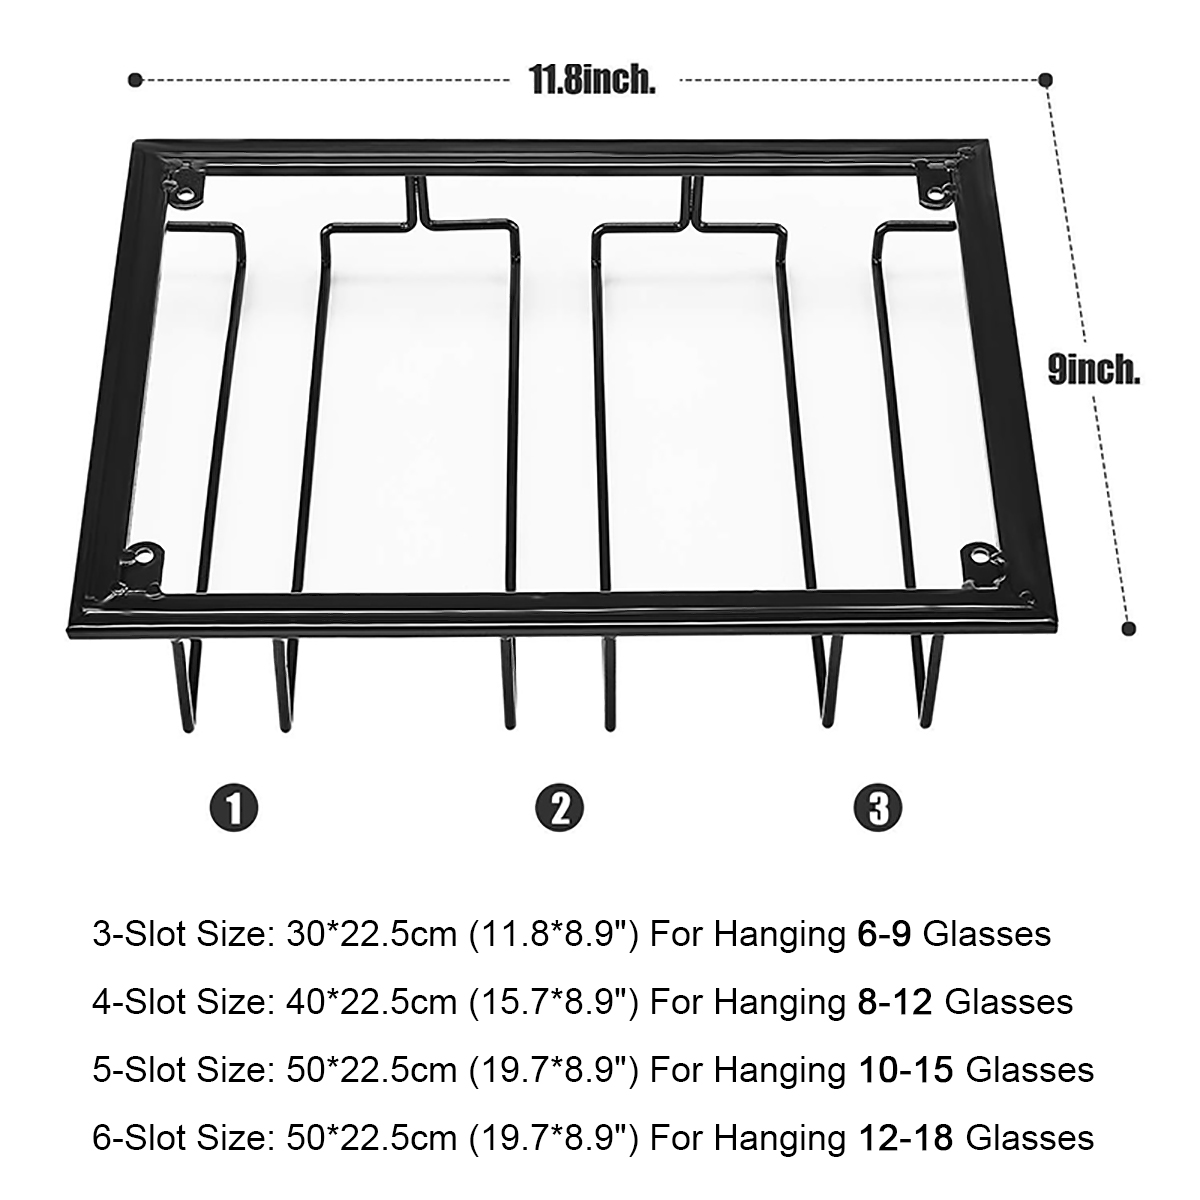 Wall-Mount-Glass-Rack-Holder-Hanging-Under-Cabinet-Hanger-Iron-Shelf-4-Type-1640341-8